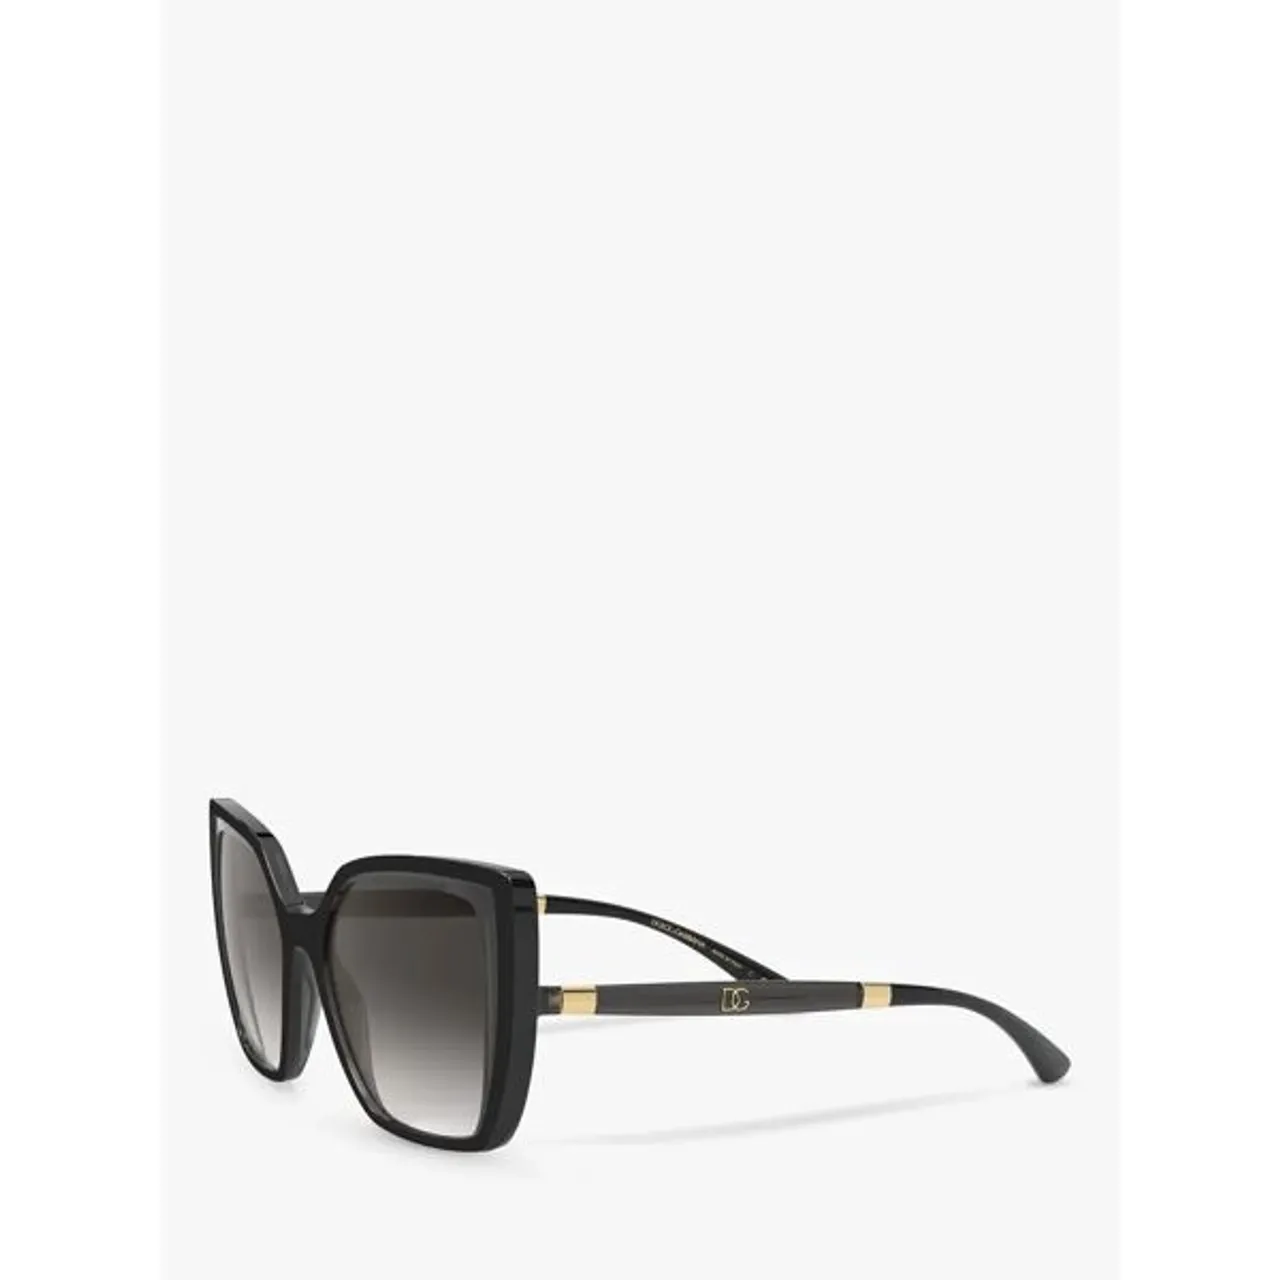 Dolce & Gabbana DG6138 Women's Butterfly Sunglasses - Black/Grey Gradient - Female